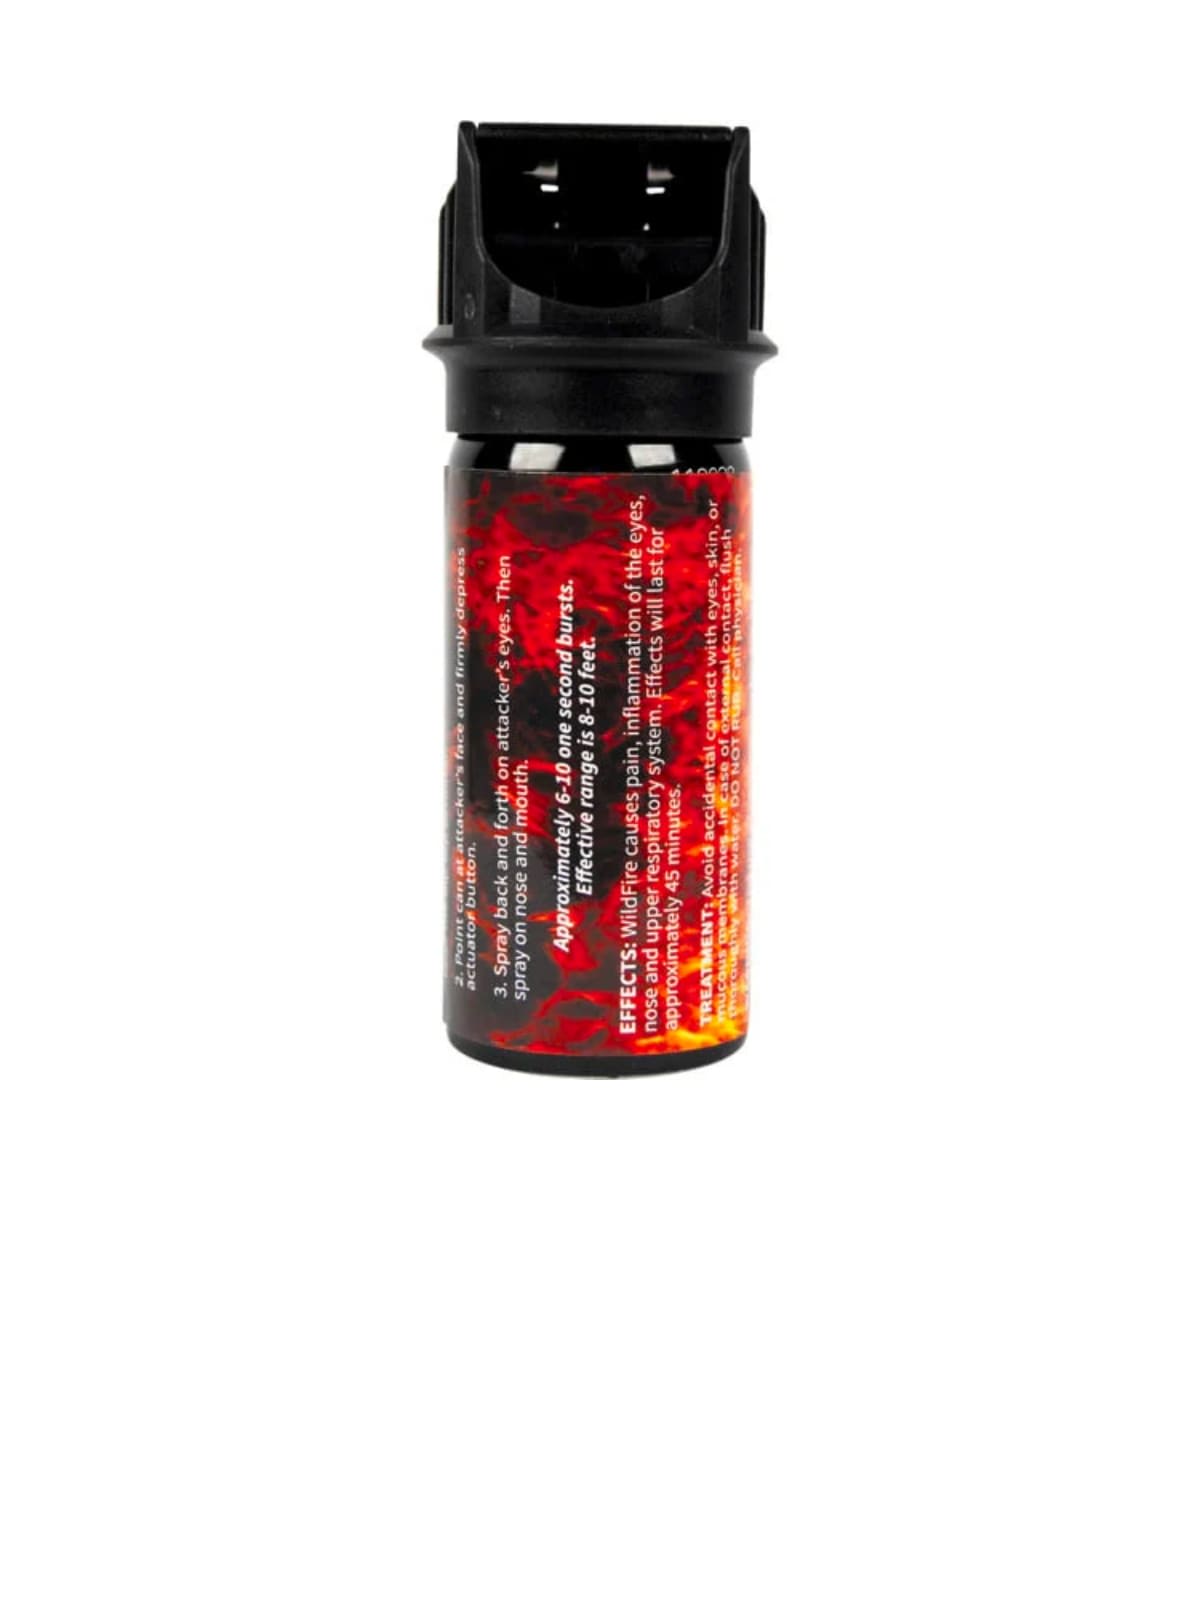 pepper spray effects